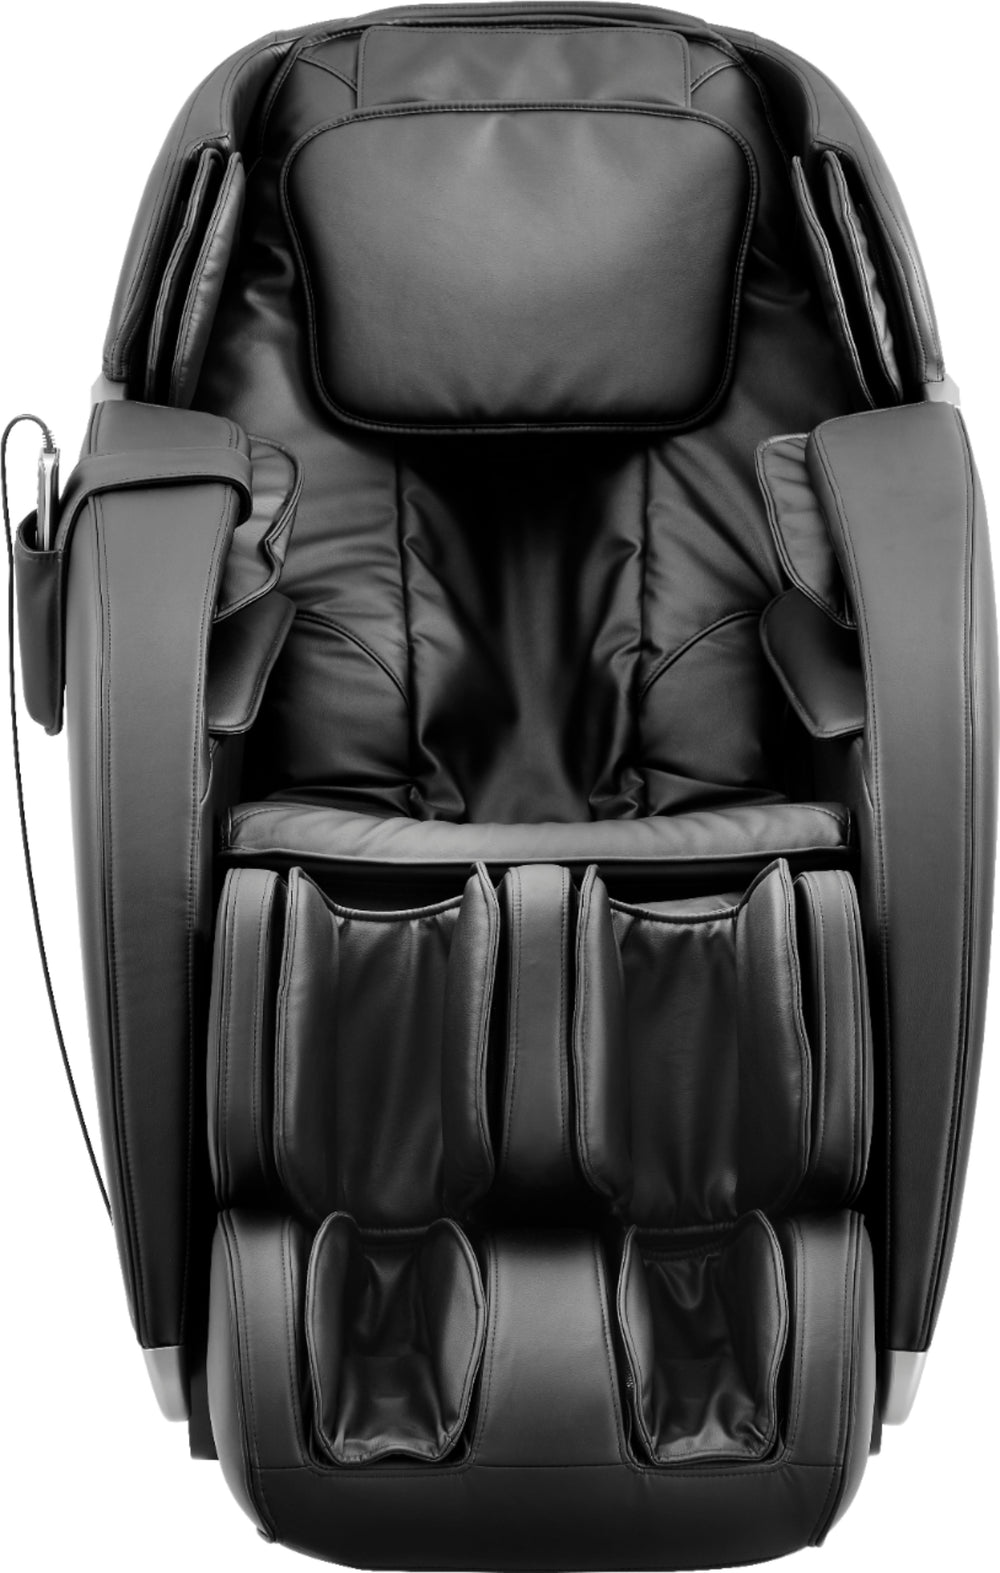 Insignia™ - 2D Zero Gravity Full Body Massage Chair - Black with silver trim_1